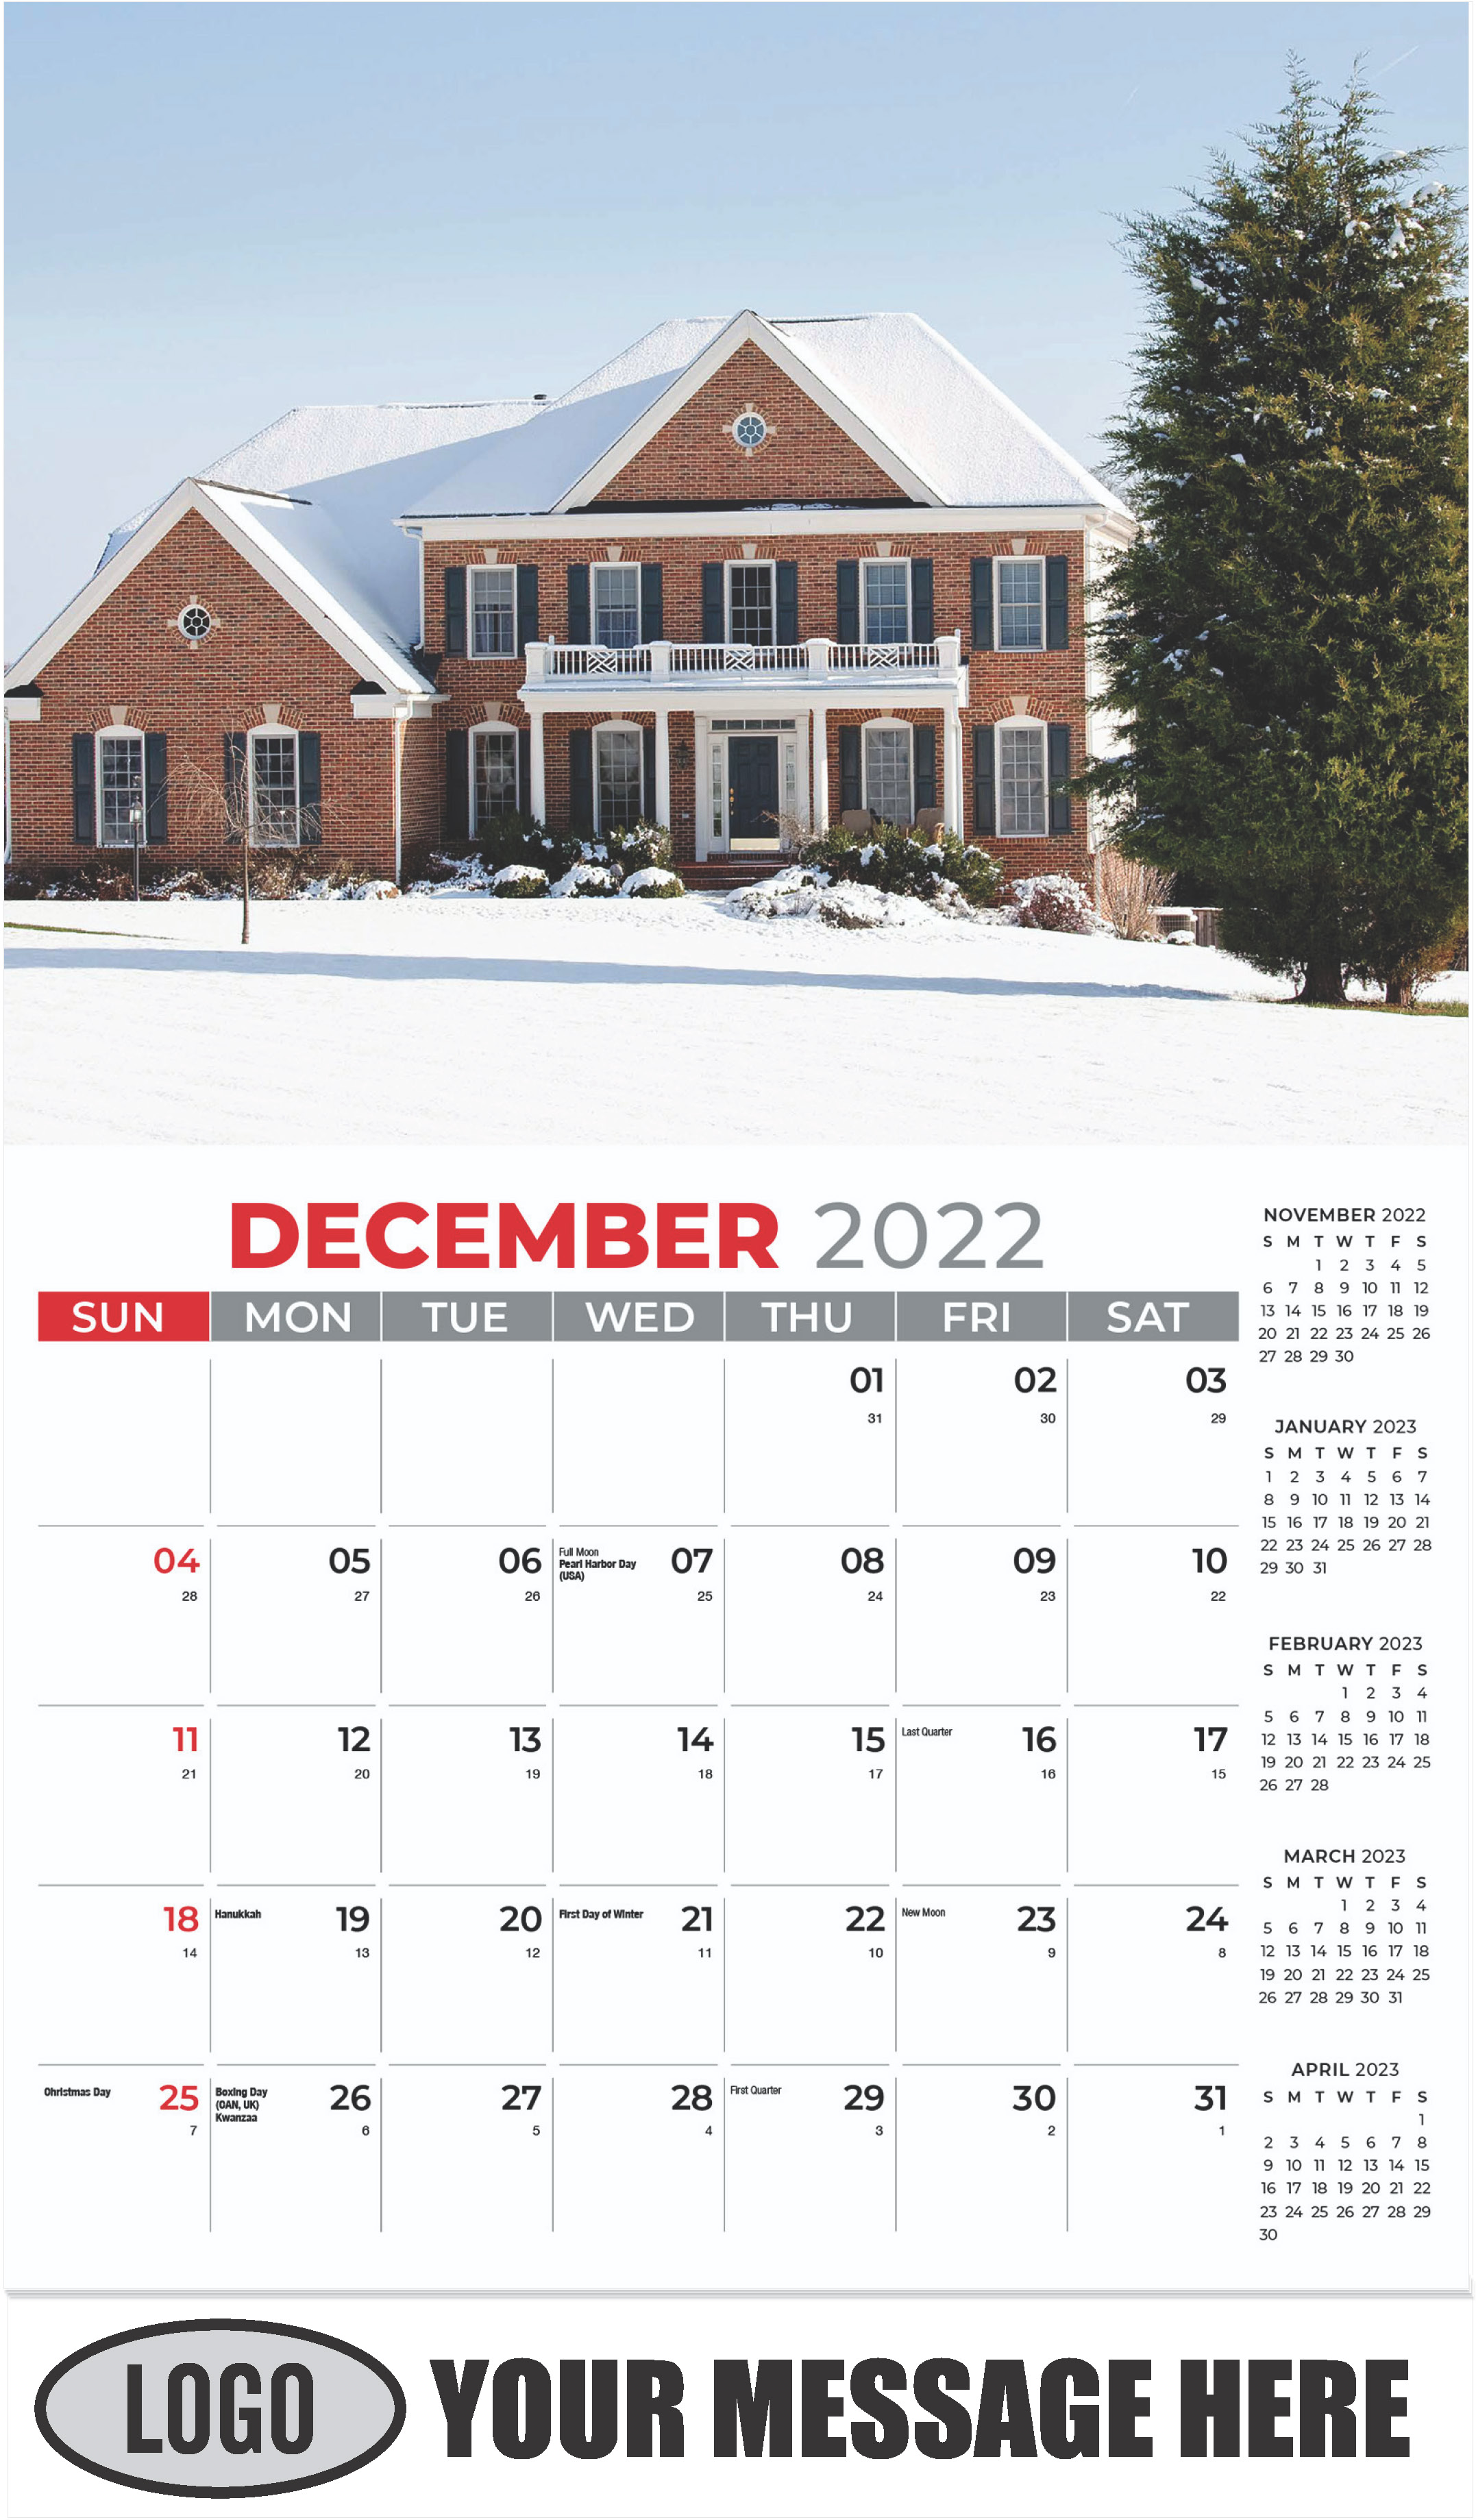 Luxury Homes Calendar - December 2022 - Homes 2023 Promotional Calendar